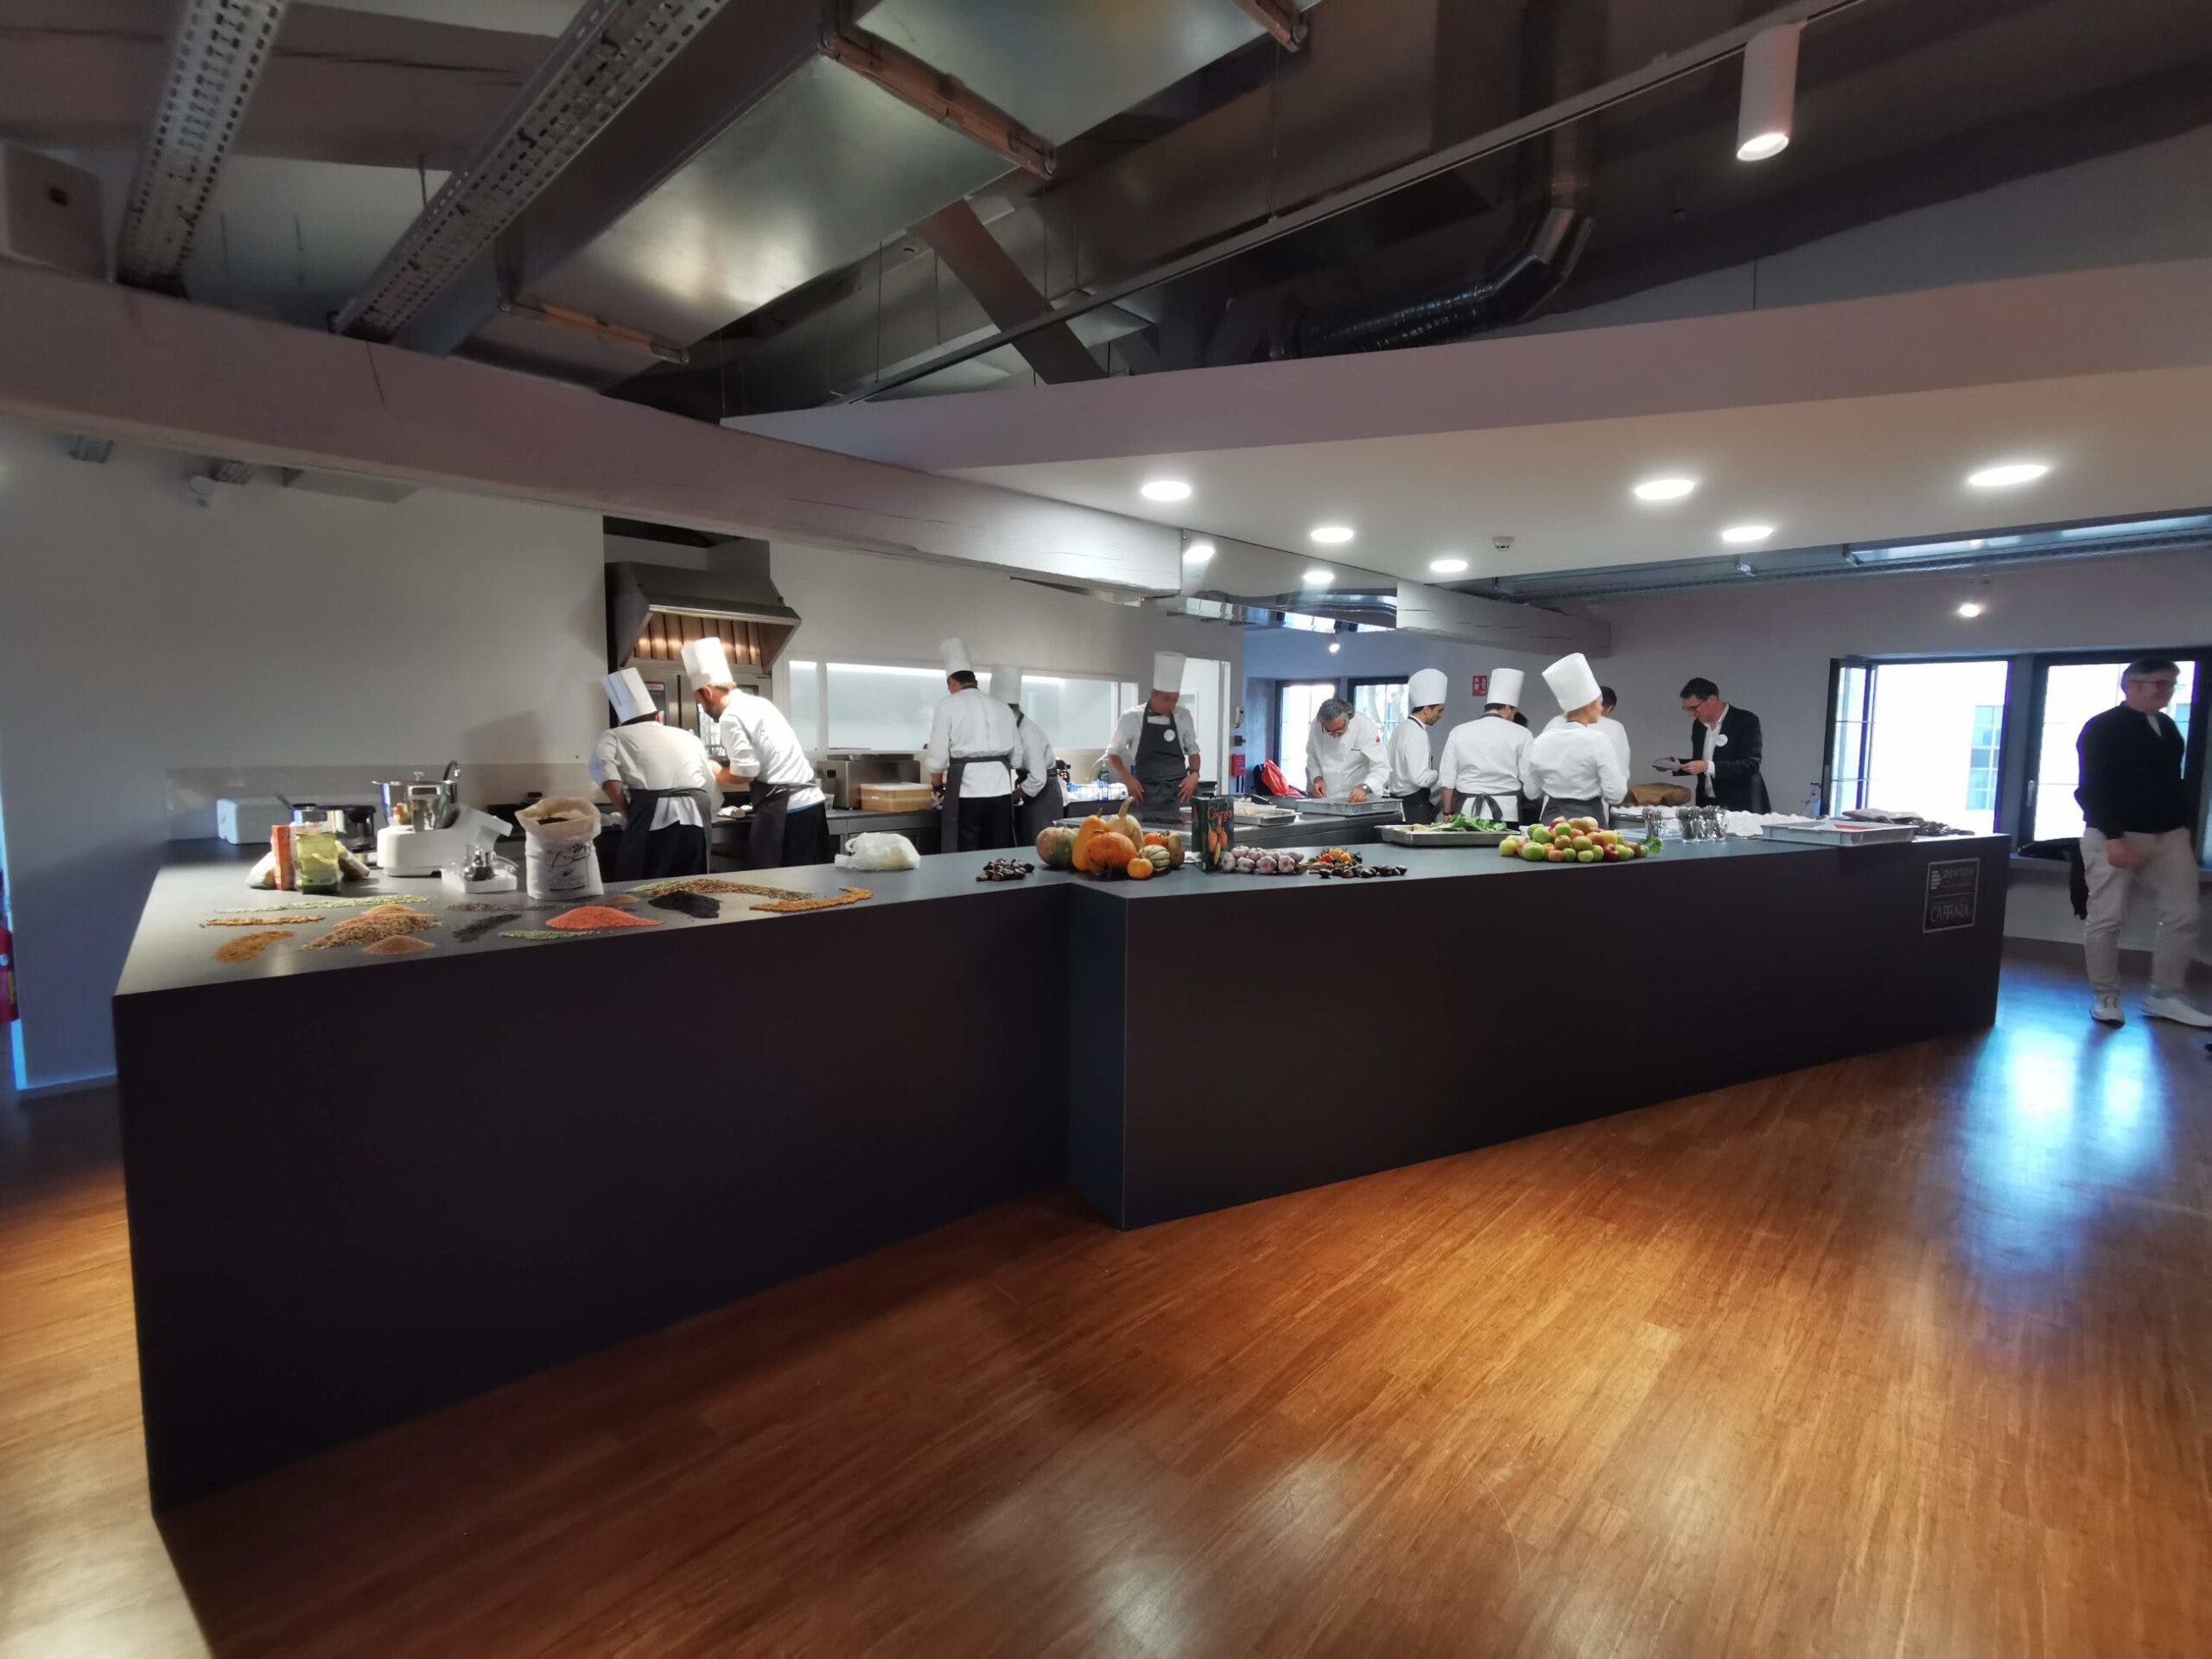 Image of IMG 20191011 173615 copie 1 scaled in Dekton by Cosentino features the kitchen of the Cité Internationale de la Gastronomie - Cosentino